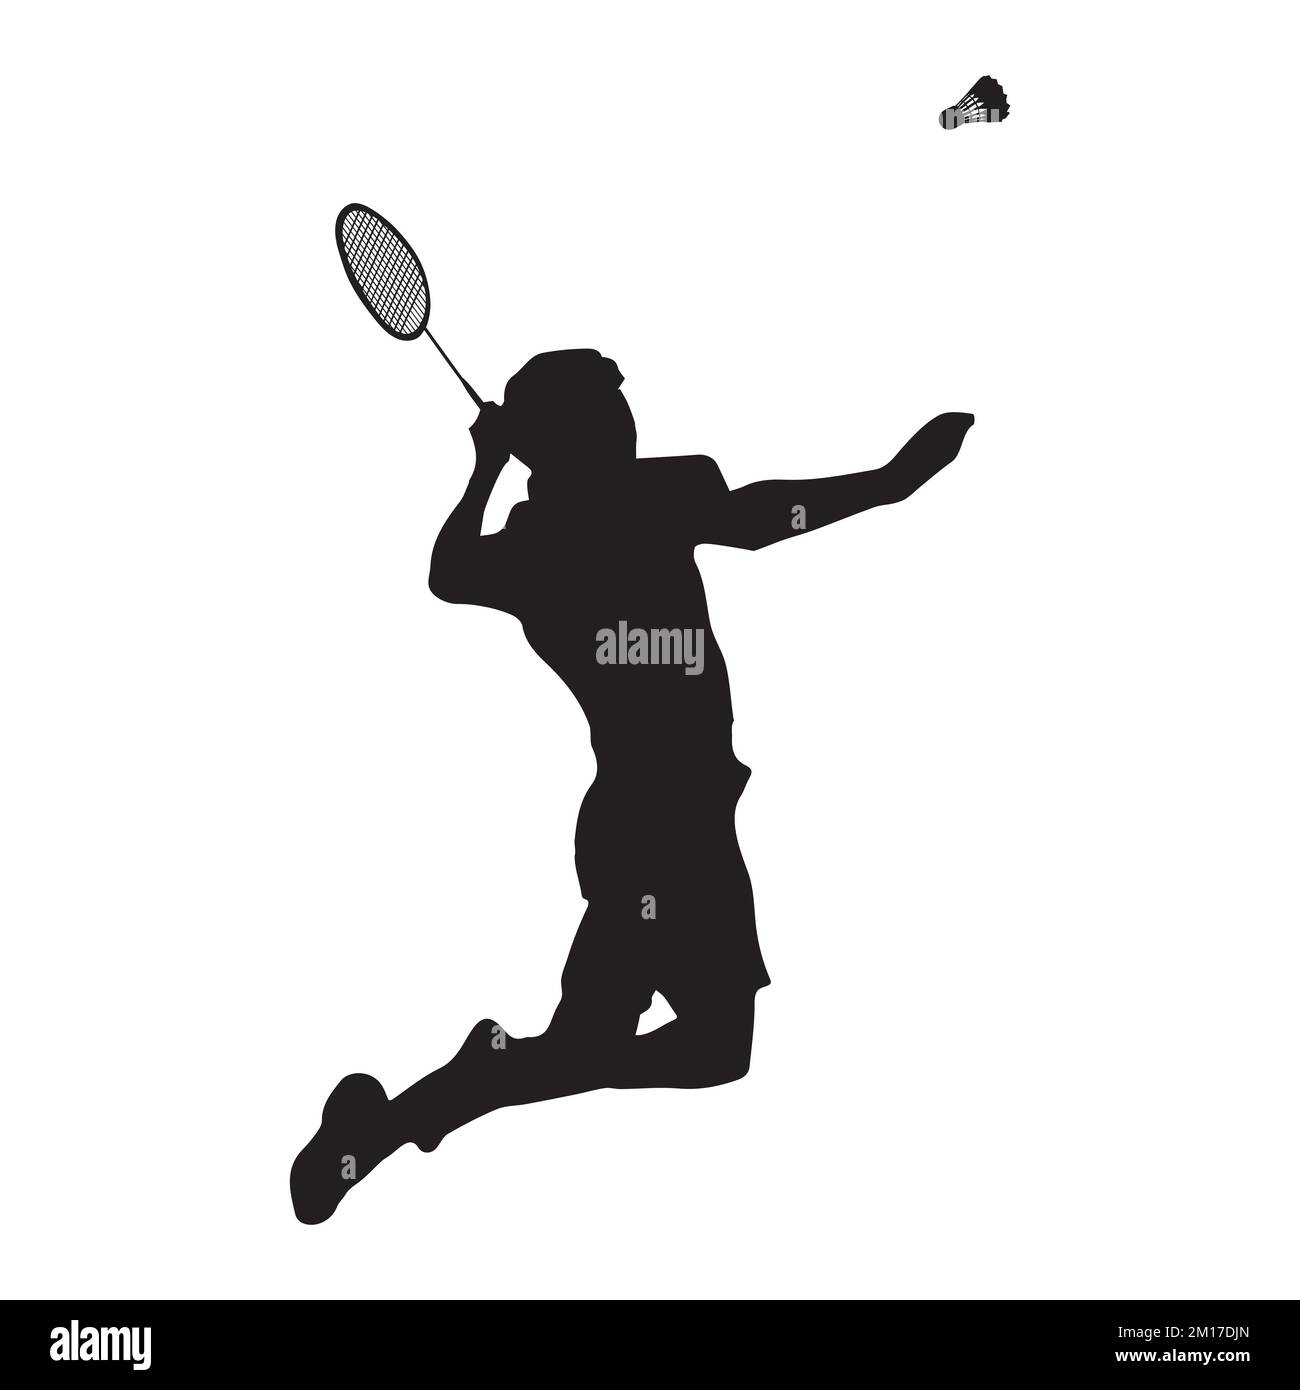 Vector Illustration of Badminton Player Stock Vector